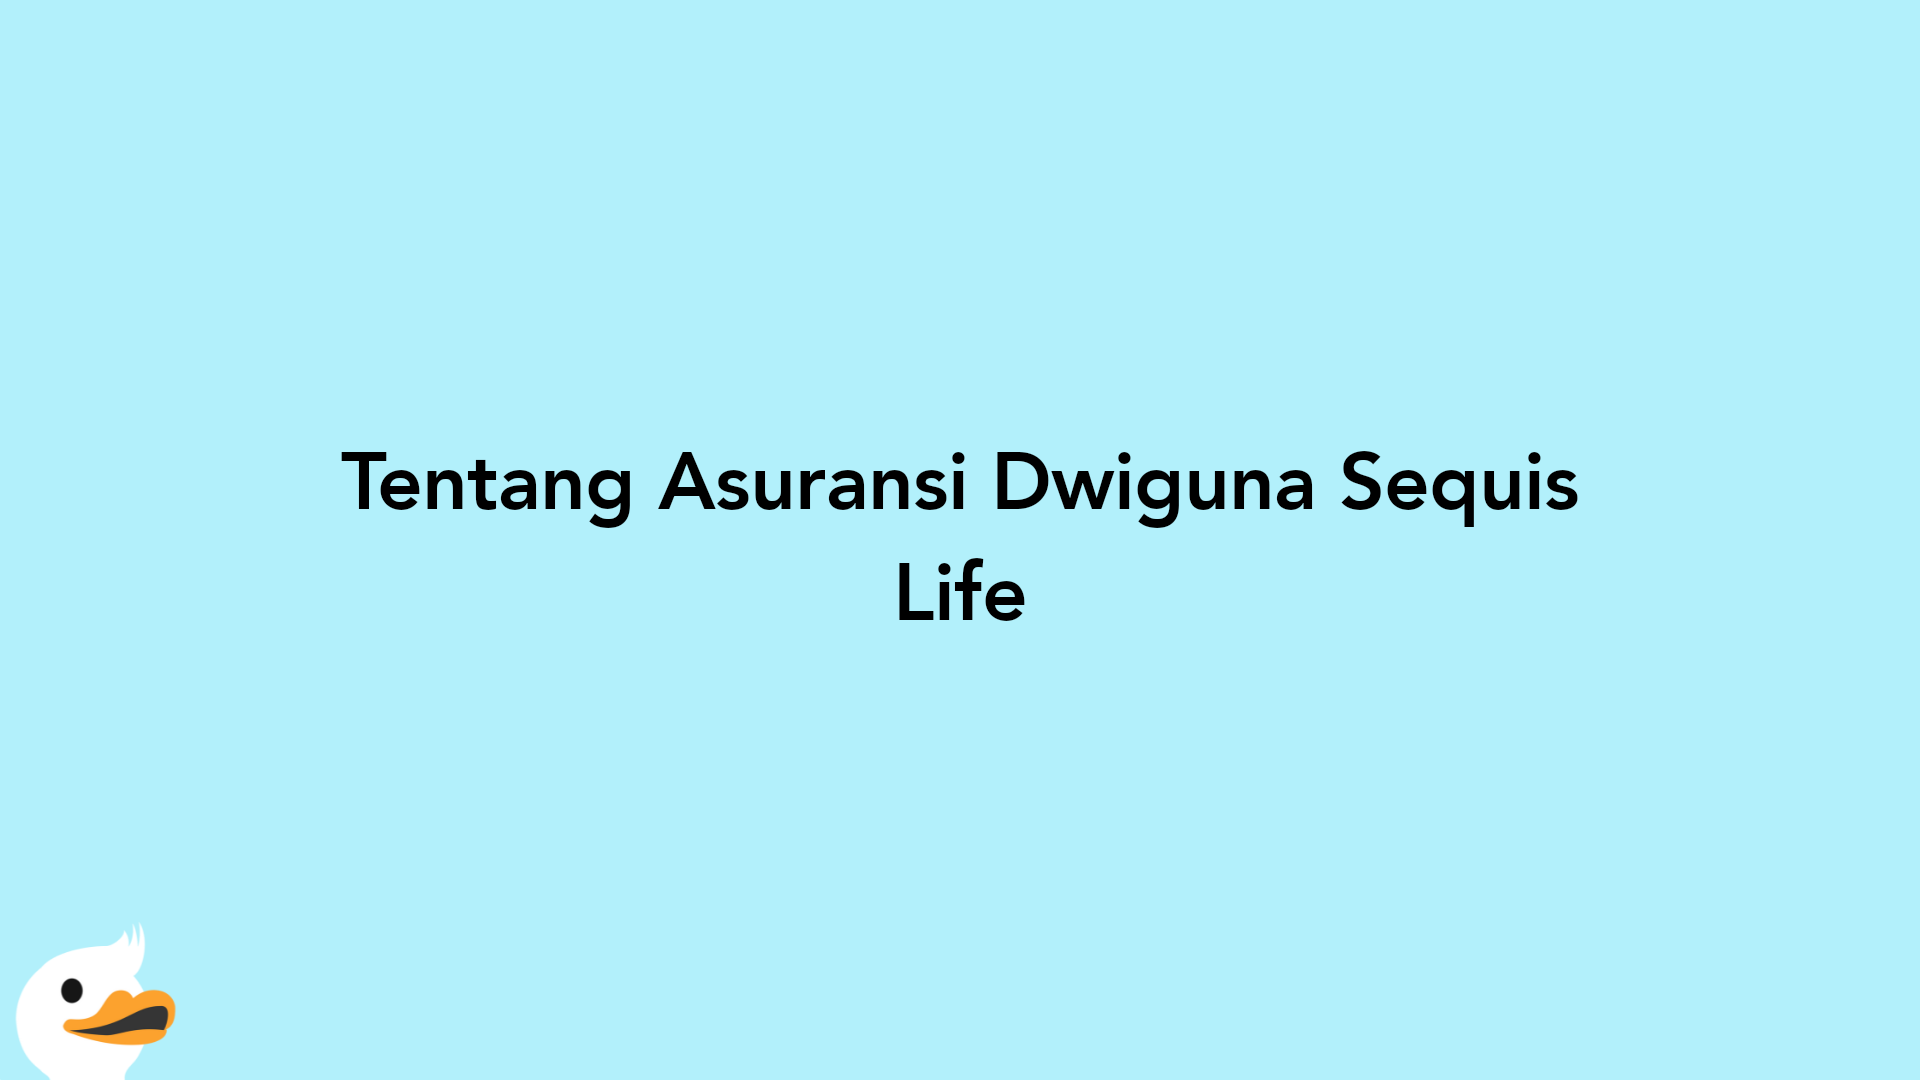 Tentang Asuransi Dwiguna Sequis Life